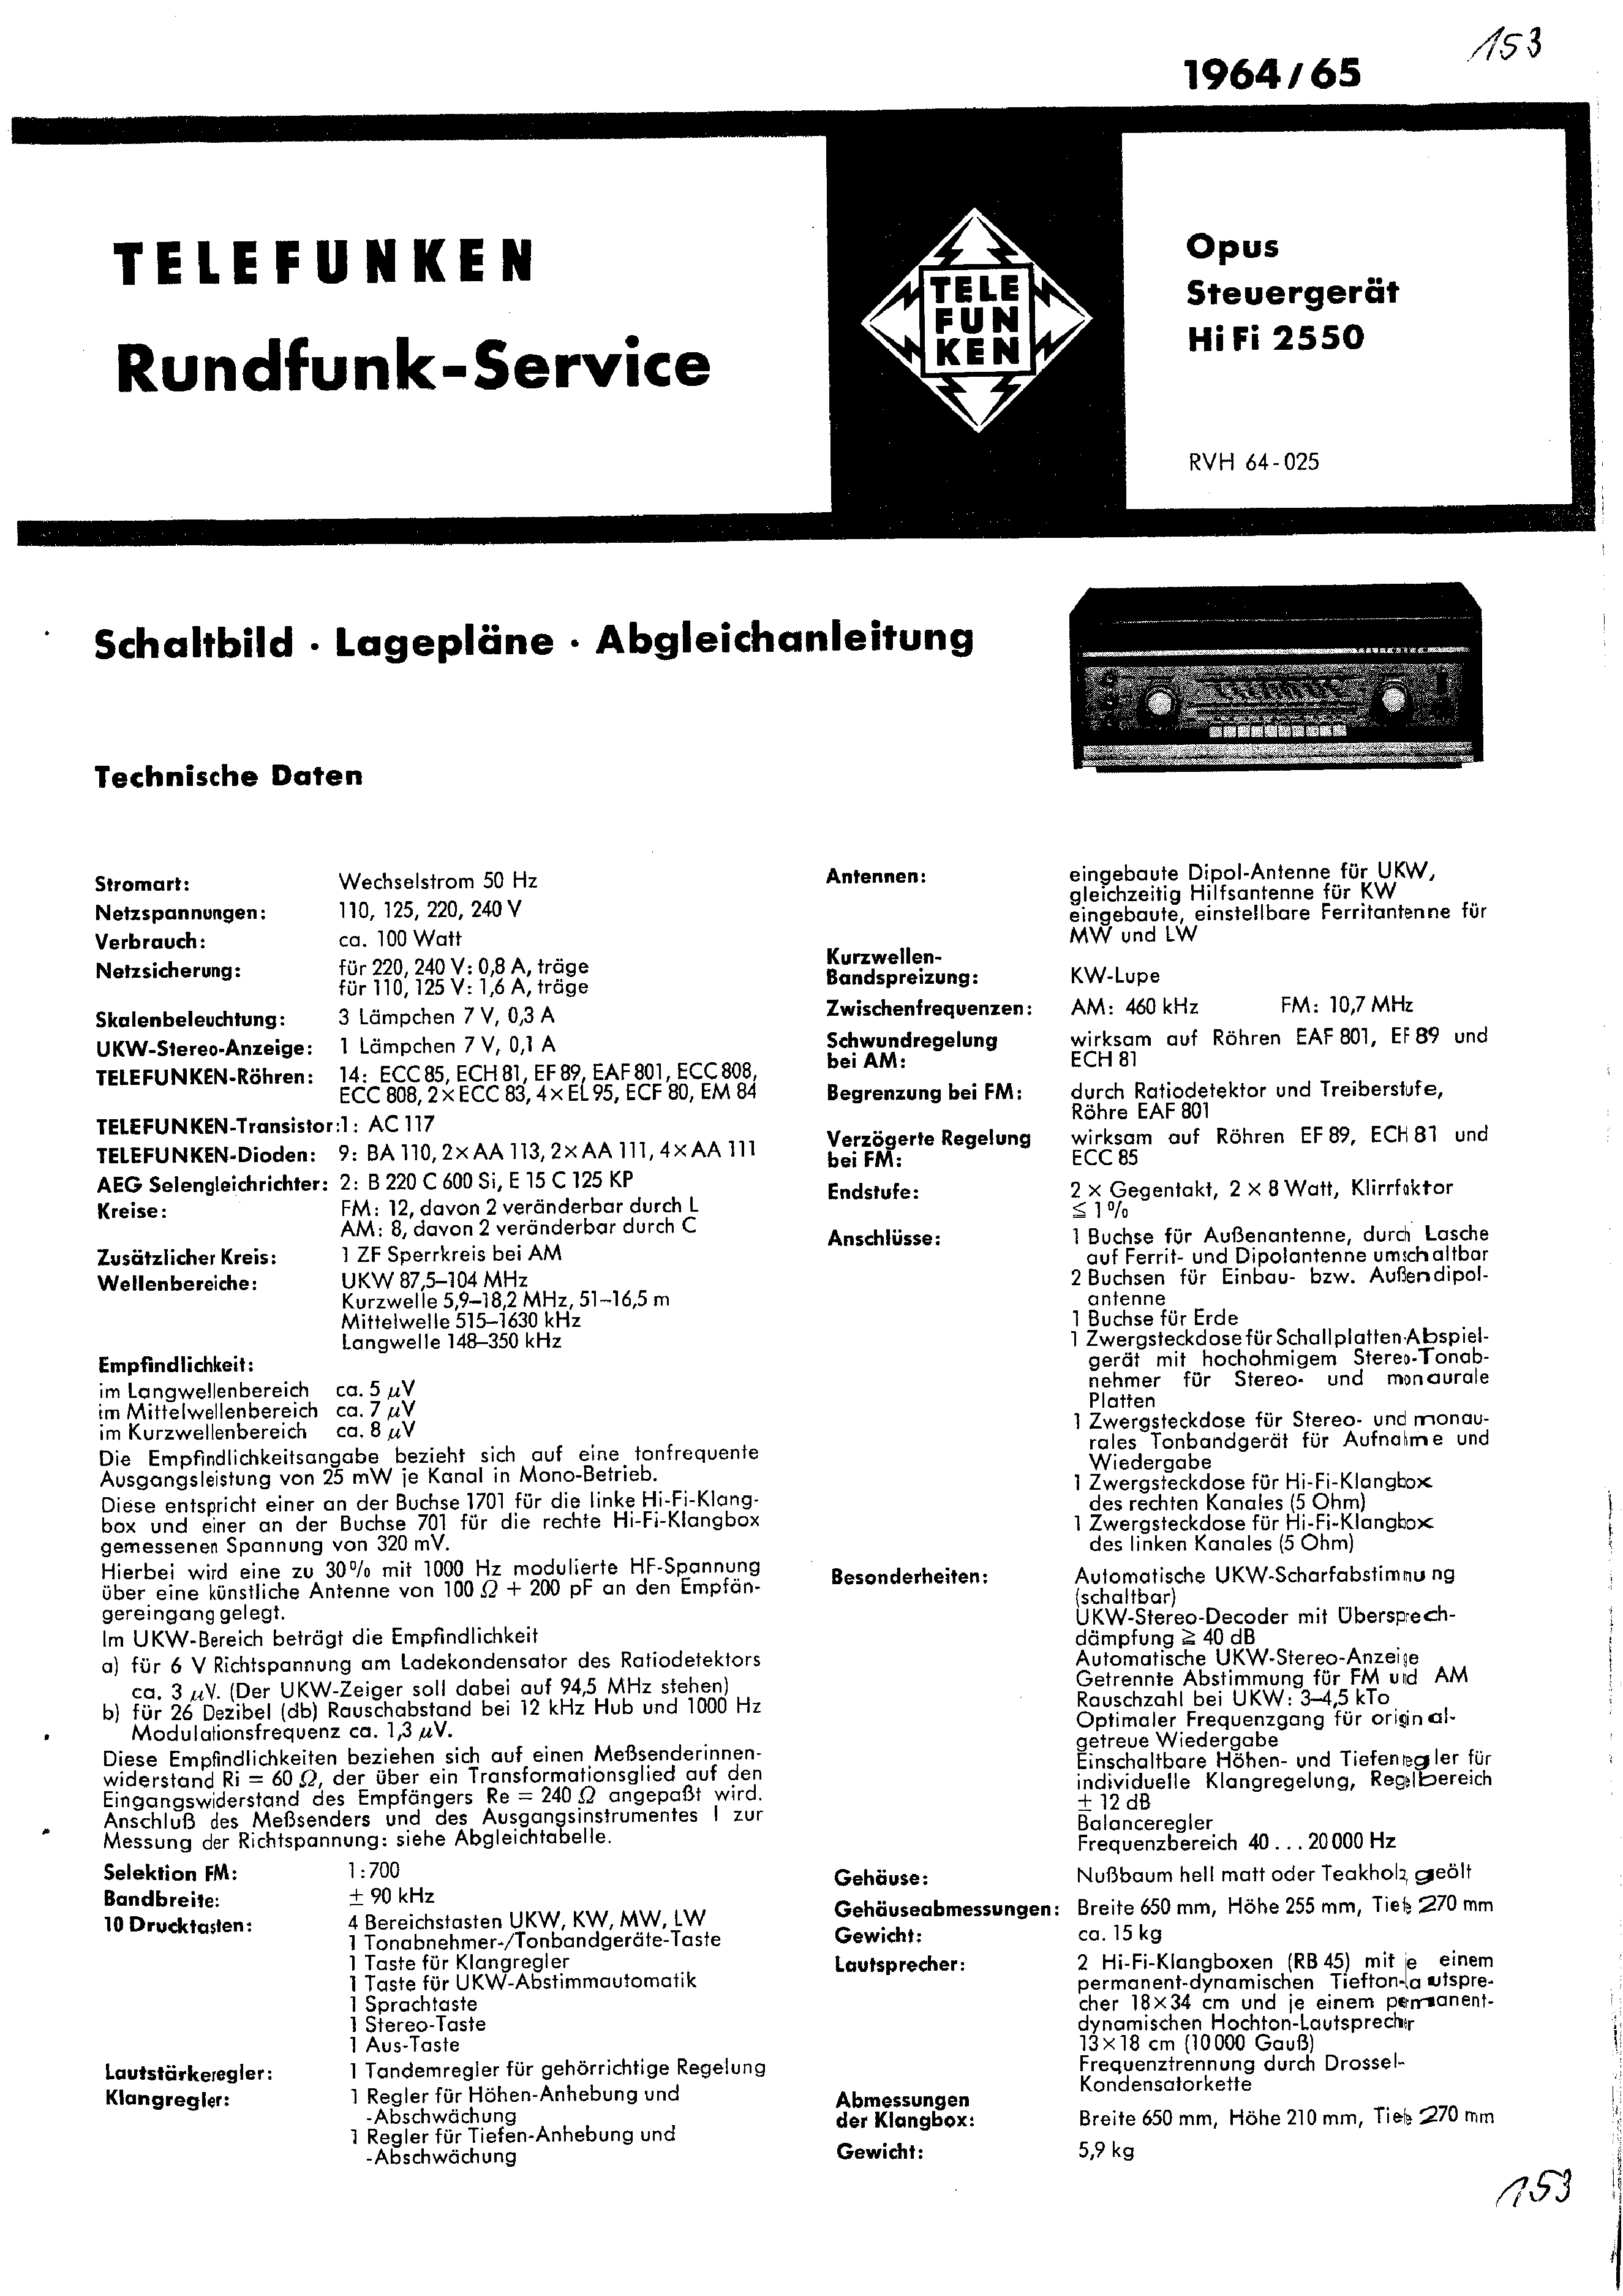 Telefunken Service Manual für Opus 2550  Copy 